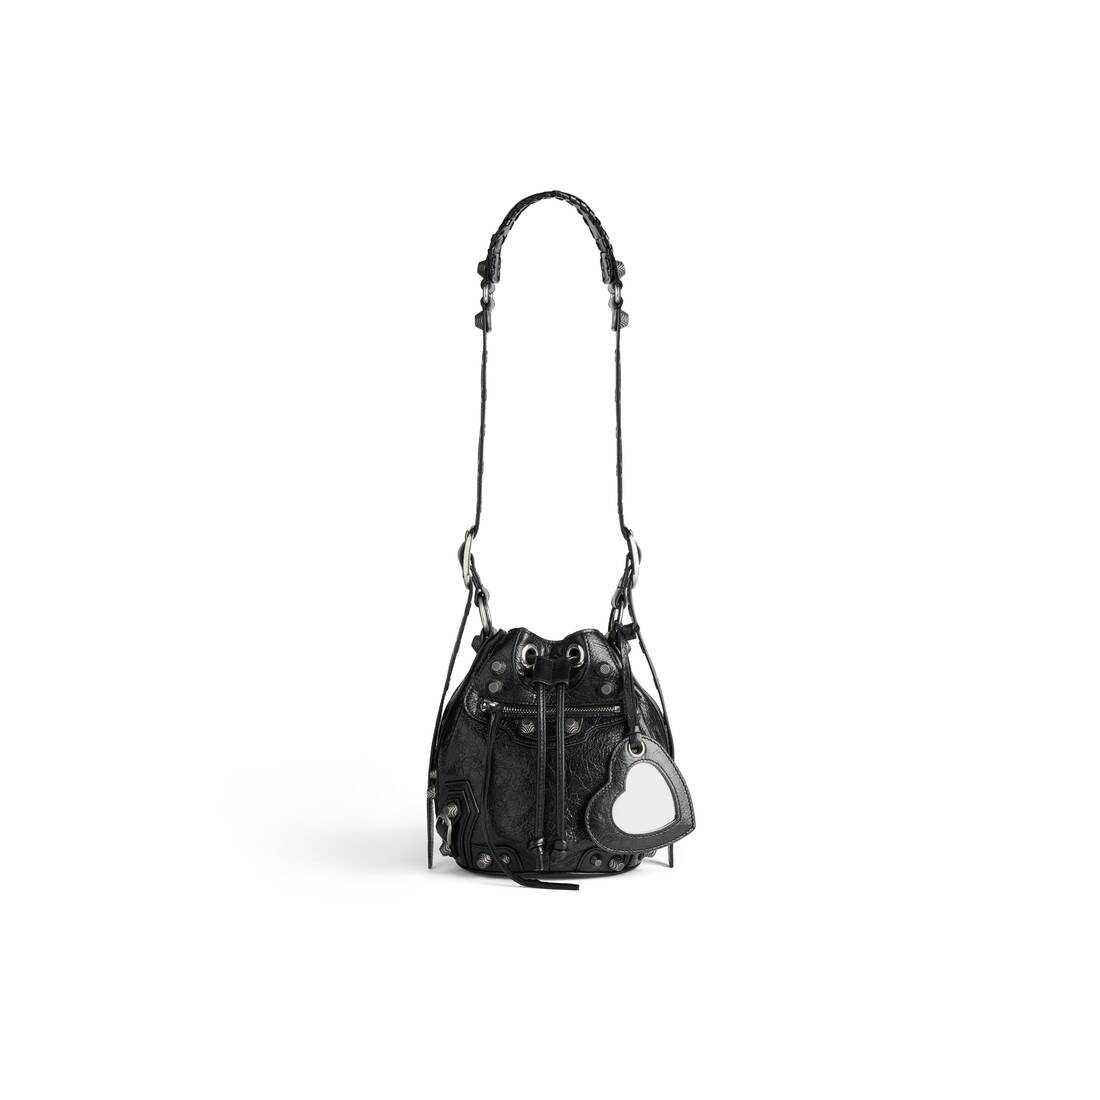 BUCKET BAG LARGE leather handbag